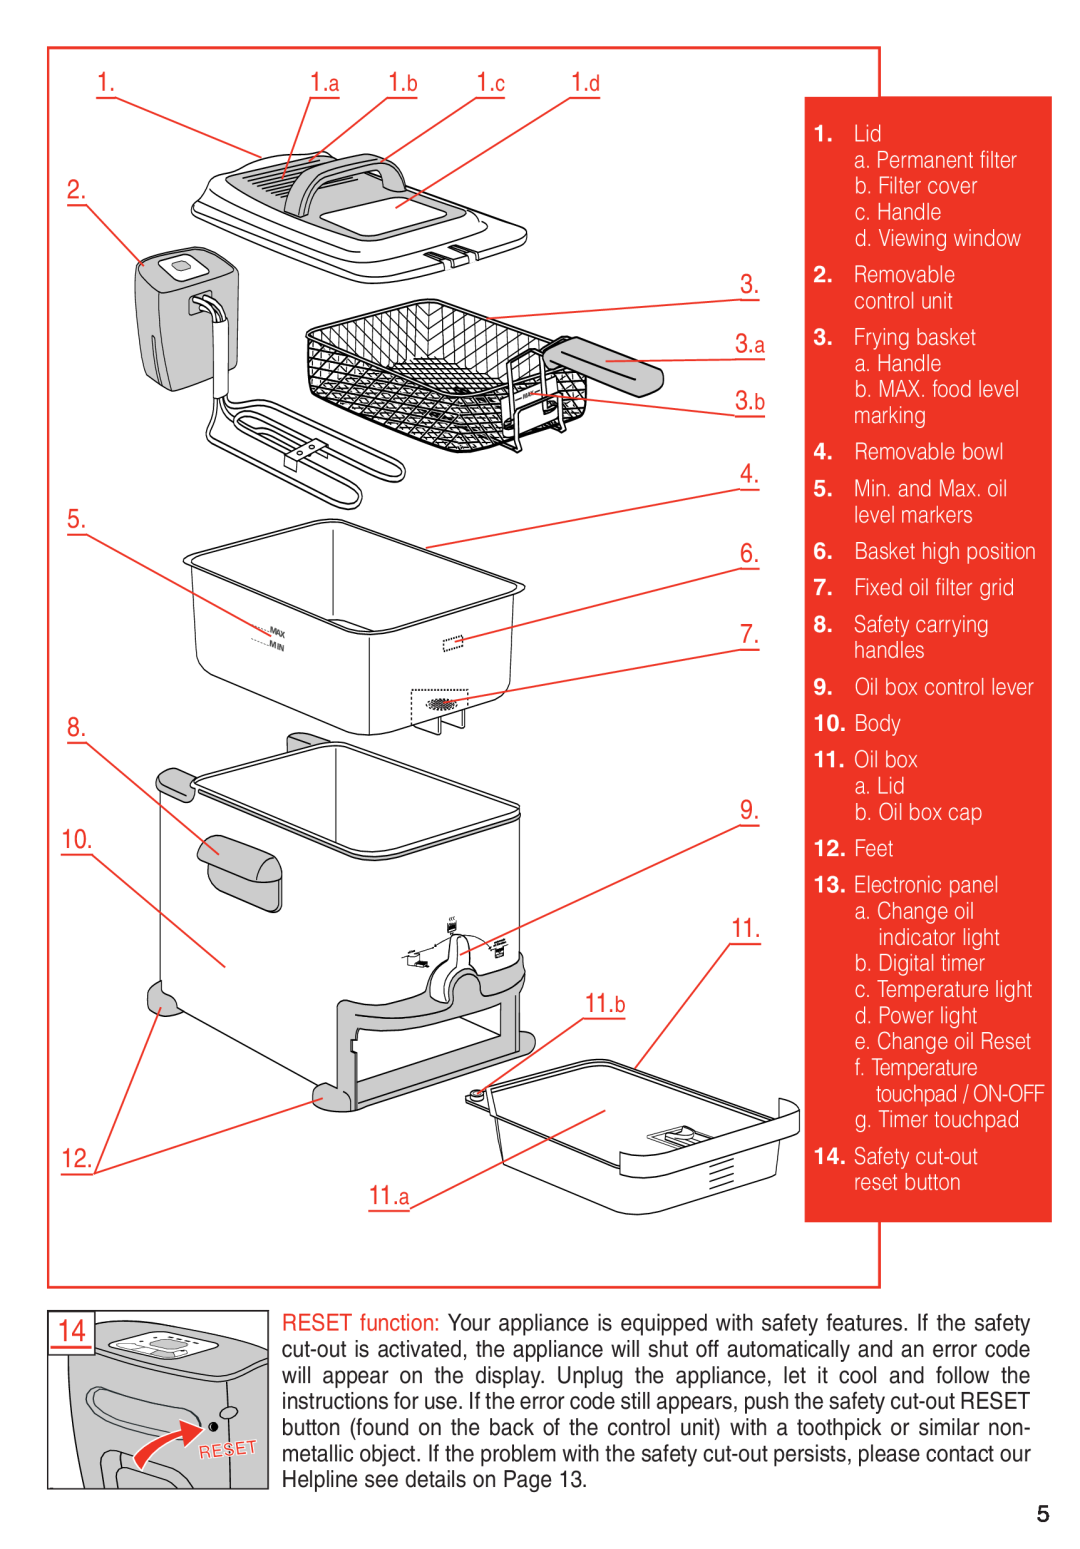 T-Fal Deep Fryer manual 1.a 1.b 1.c 1.d, 11.b 11.a, Safety carrying, handles, Body 